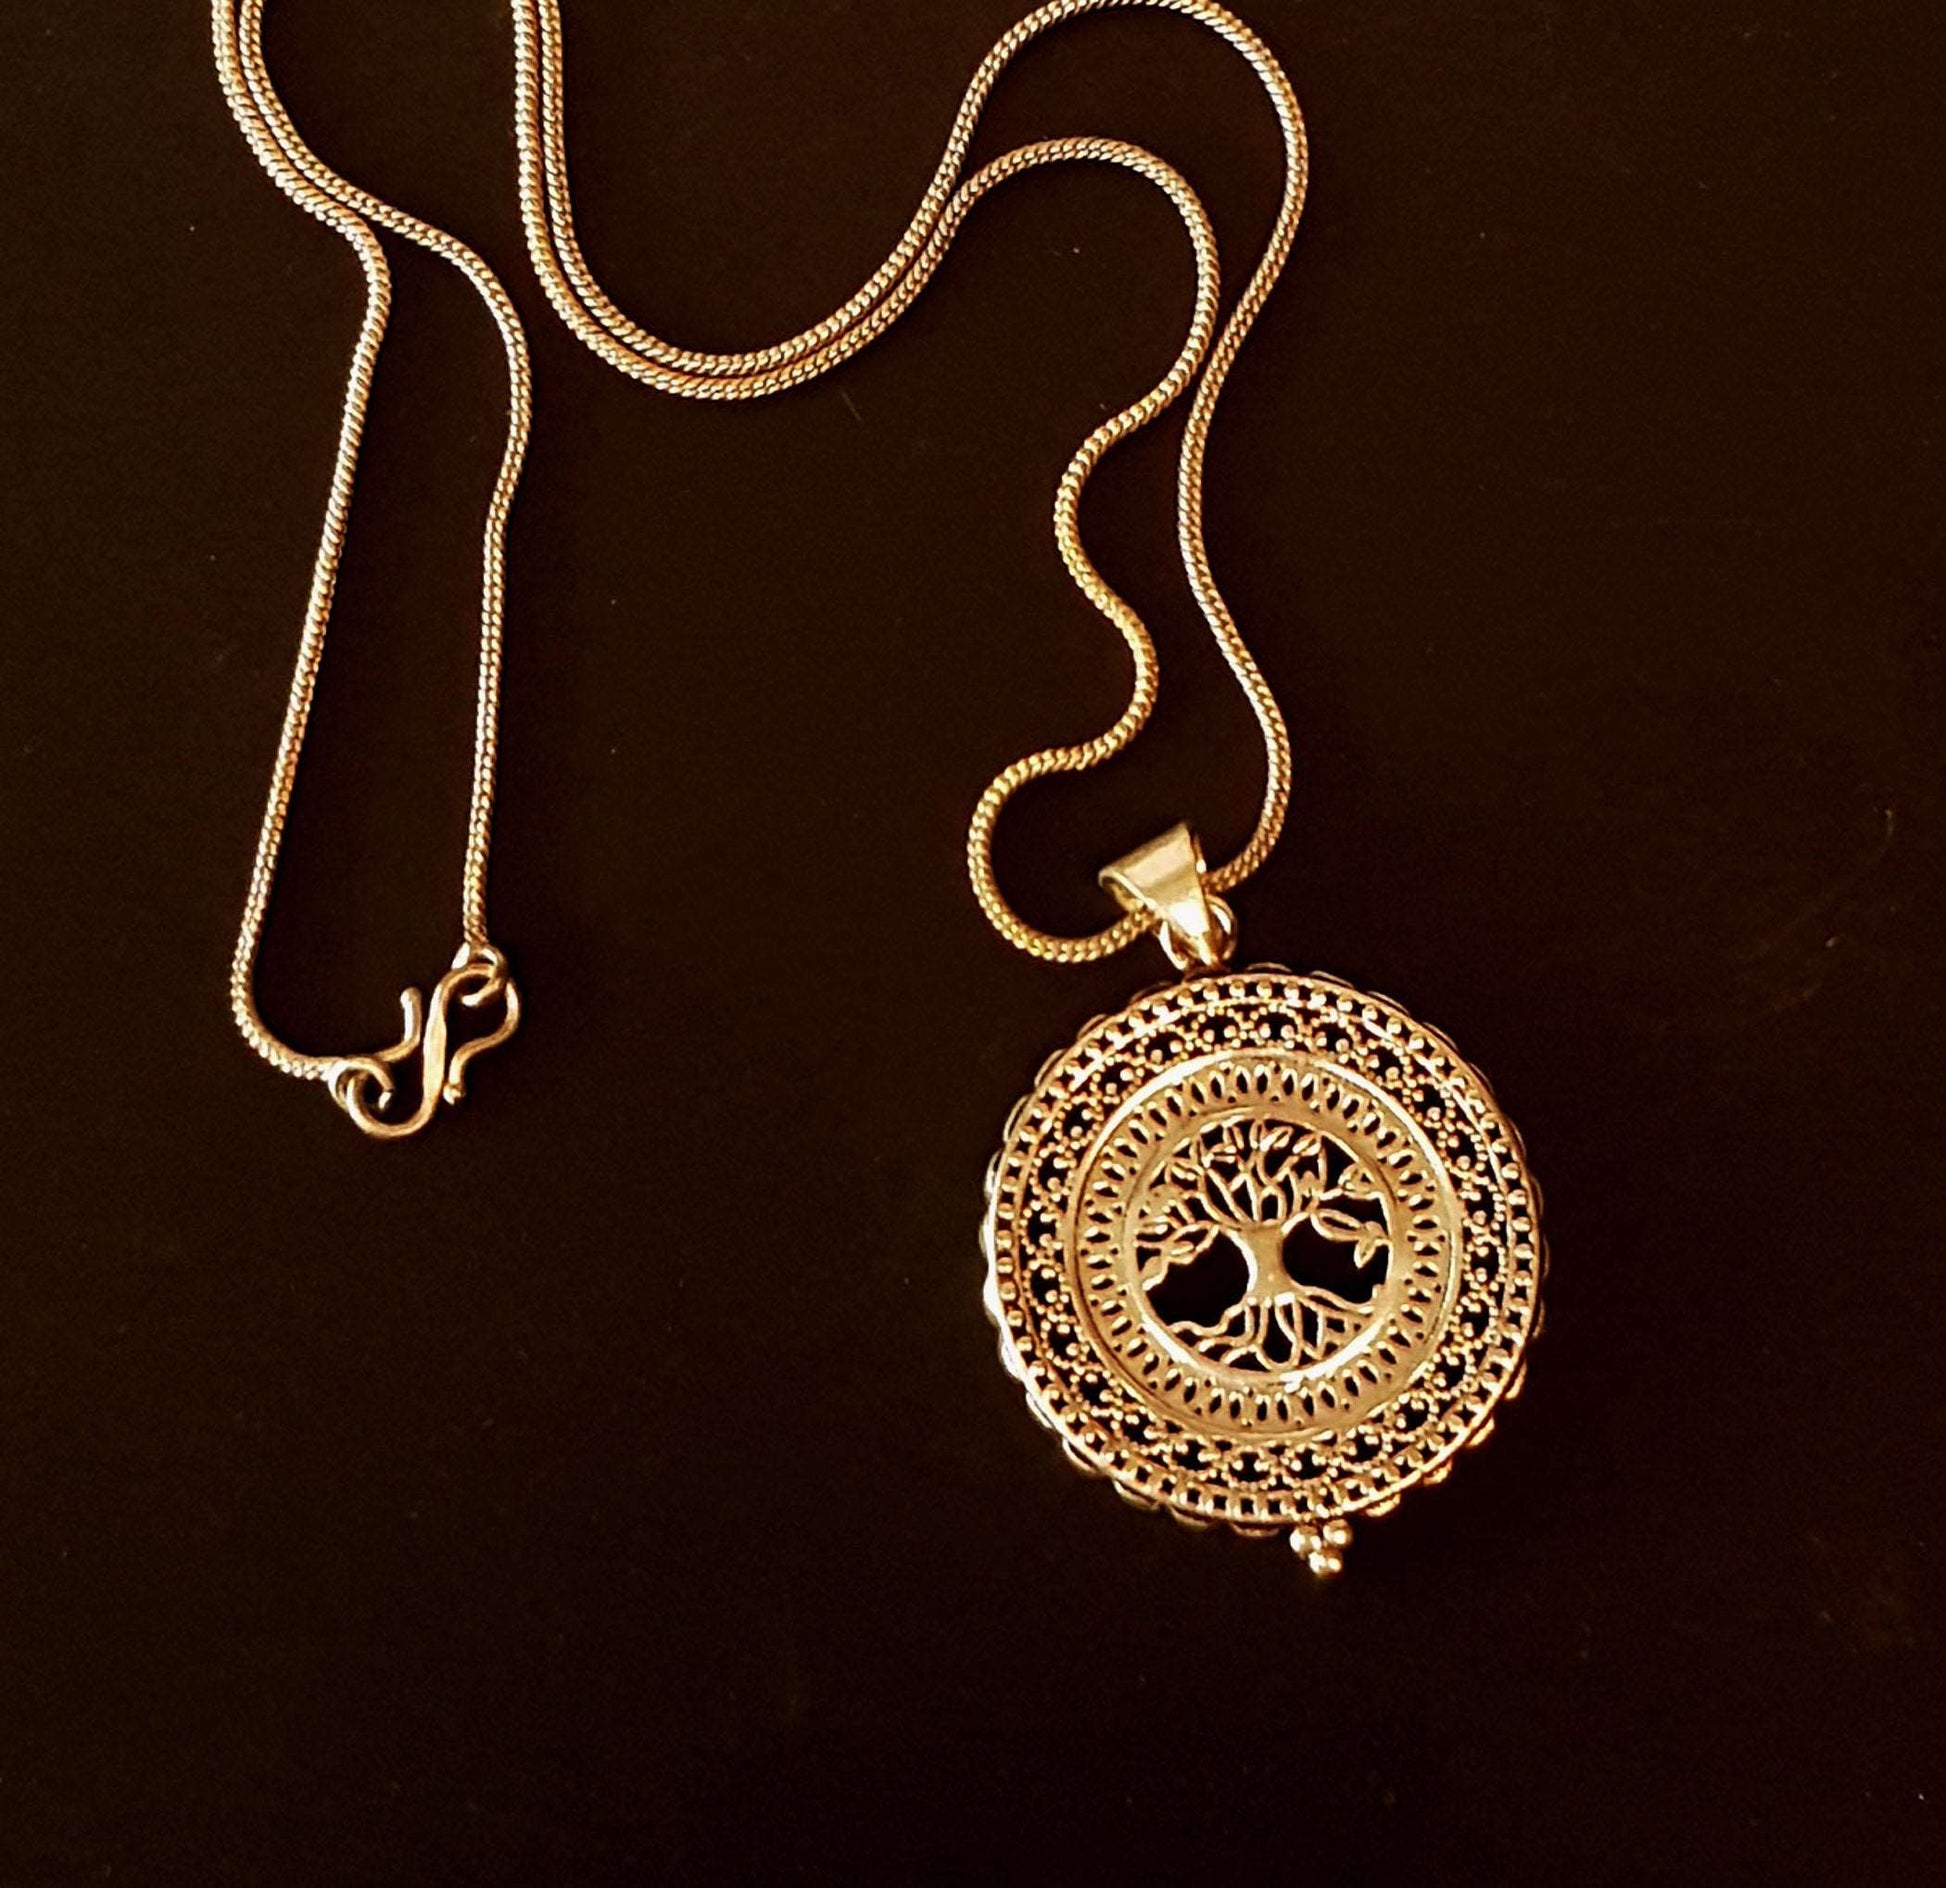 Bronze filigree tree of life pendant. Engraved gold disk shape tree pendant necklace. Gender neutral design. 1.75 inch diameter on chain. - Vintage India Ca